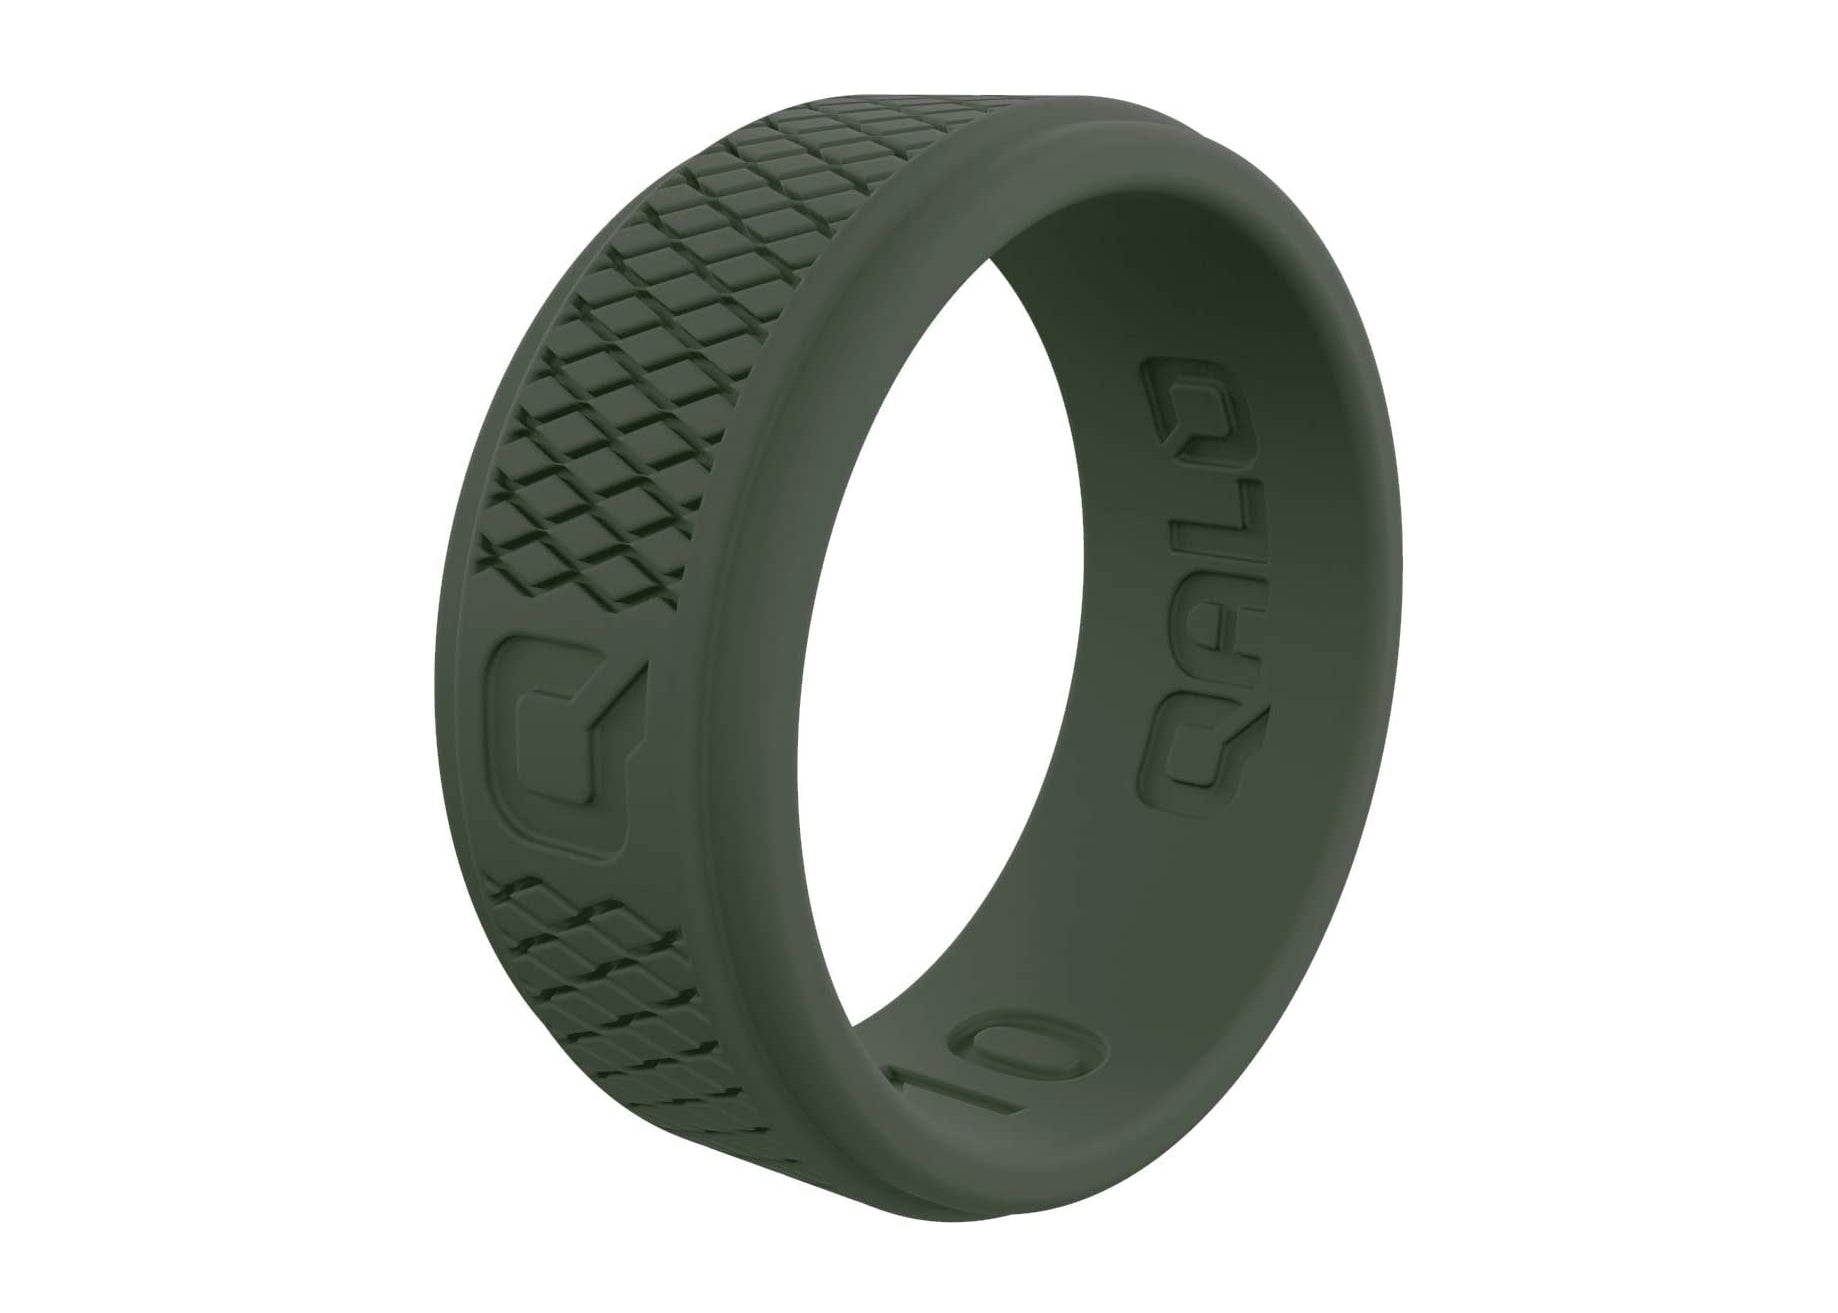 Qalo Qalo Women's Stackable Ring Set - White Quartz/Jet Black $ 24.99 |  TYLER'S